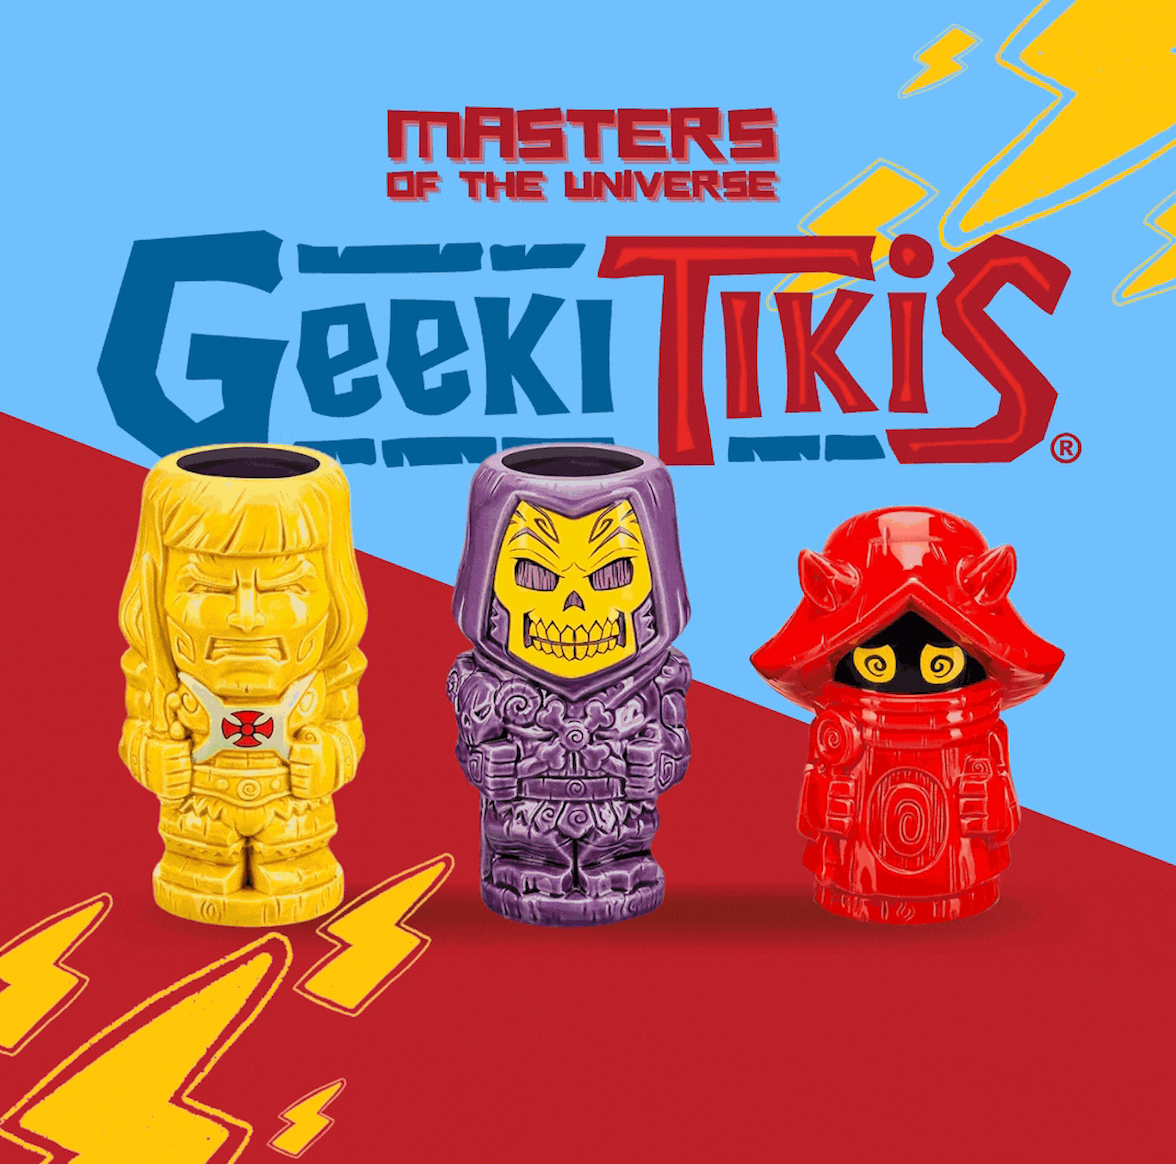 He-man and Masters of the Universe Geeki Tiki Mugs are Here!